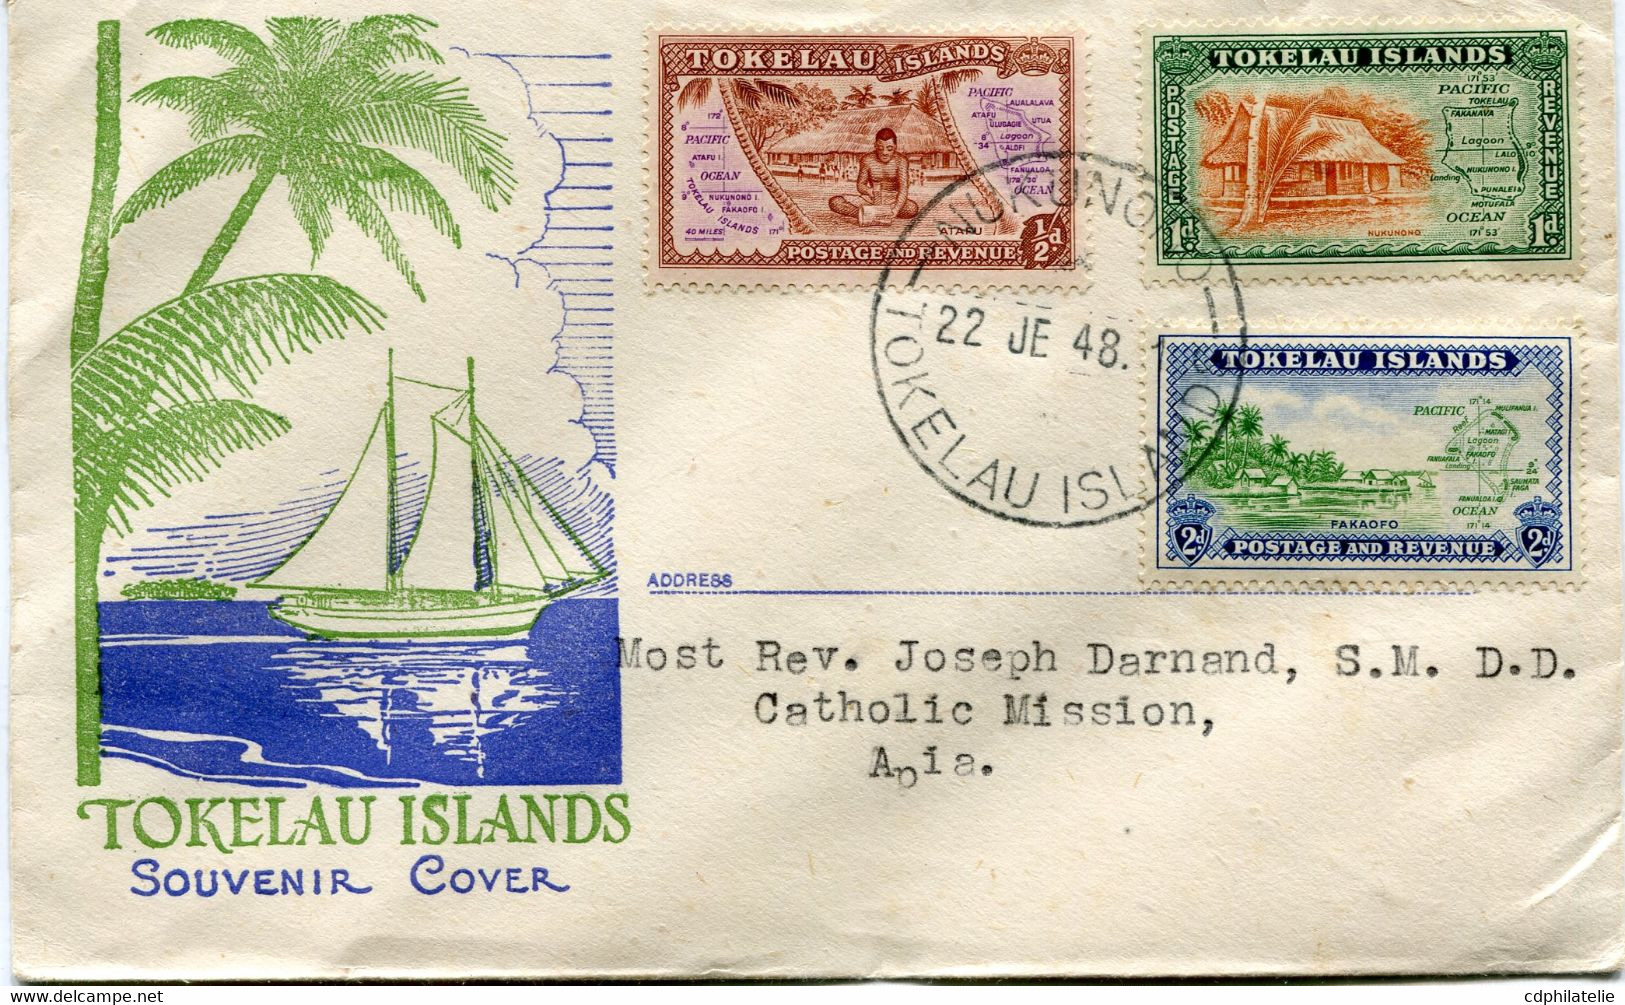 TOKELAU ENVELOPPE " SOUVENIR COVER " DEPART NUKUNONU 22 JE 48 TOKELAU ISLANDS POUR LES SAMOA - Tokelau